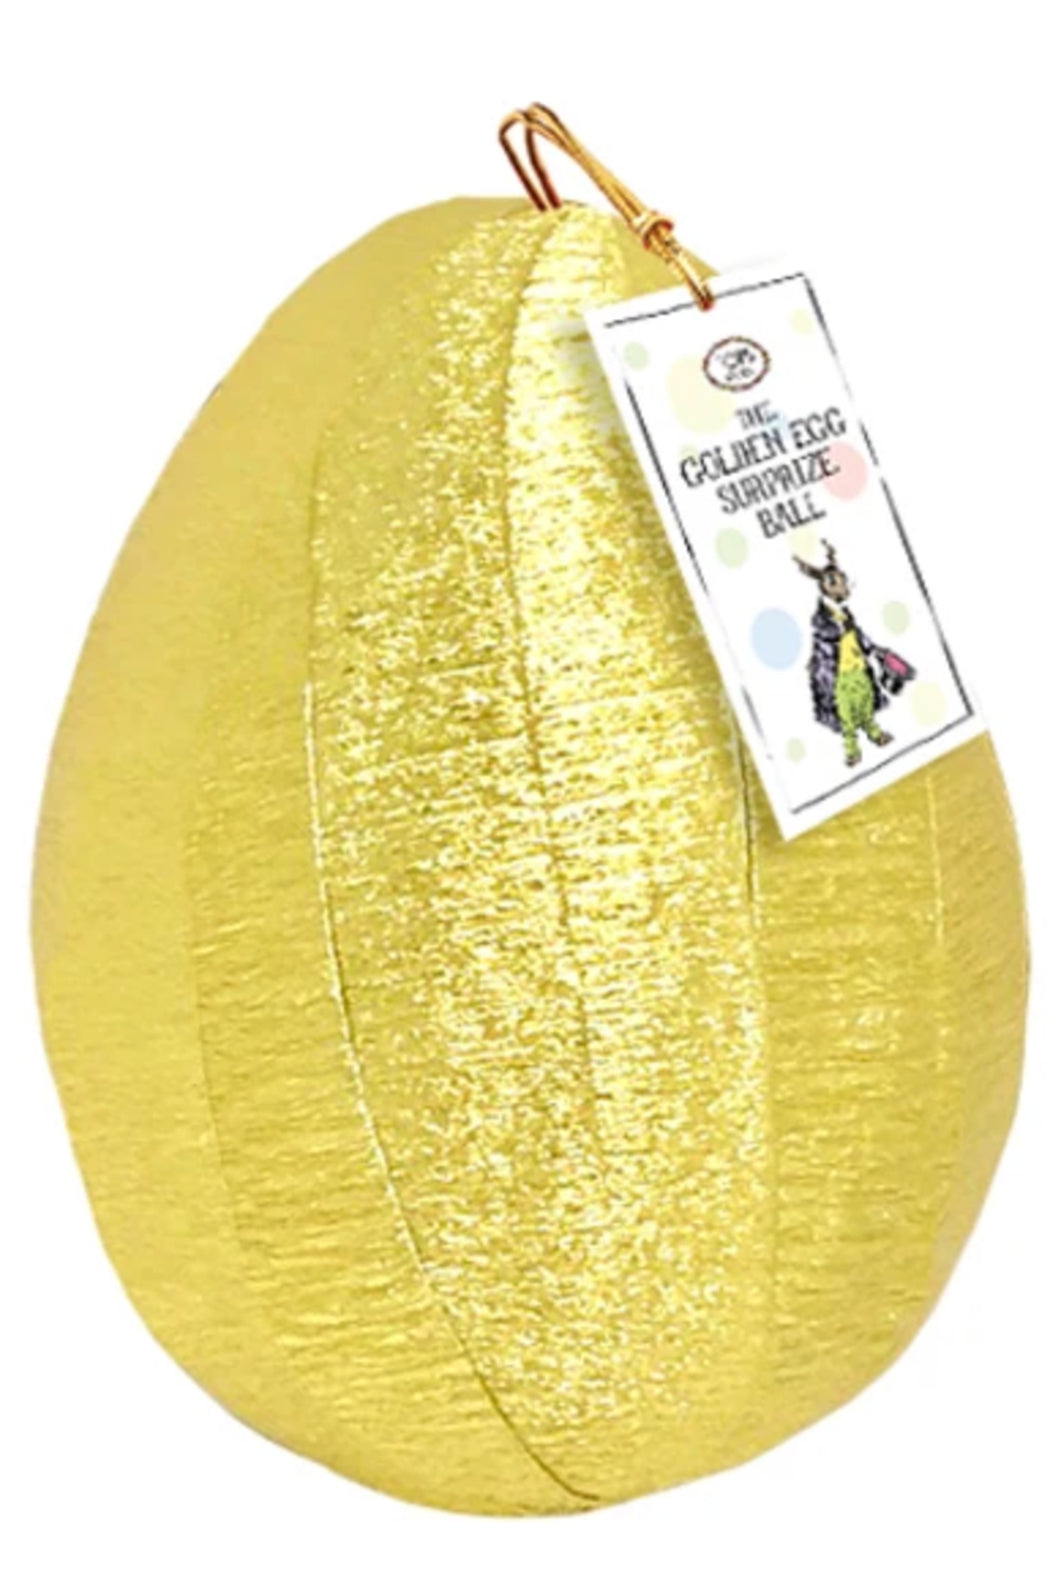 Tops Malibu Surprize Ball Golden Egg